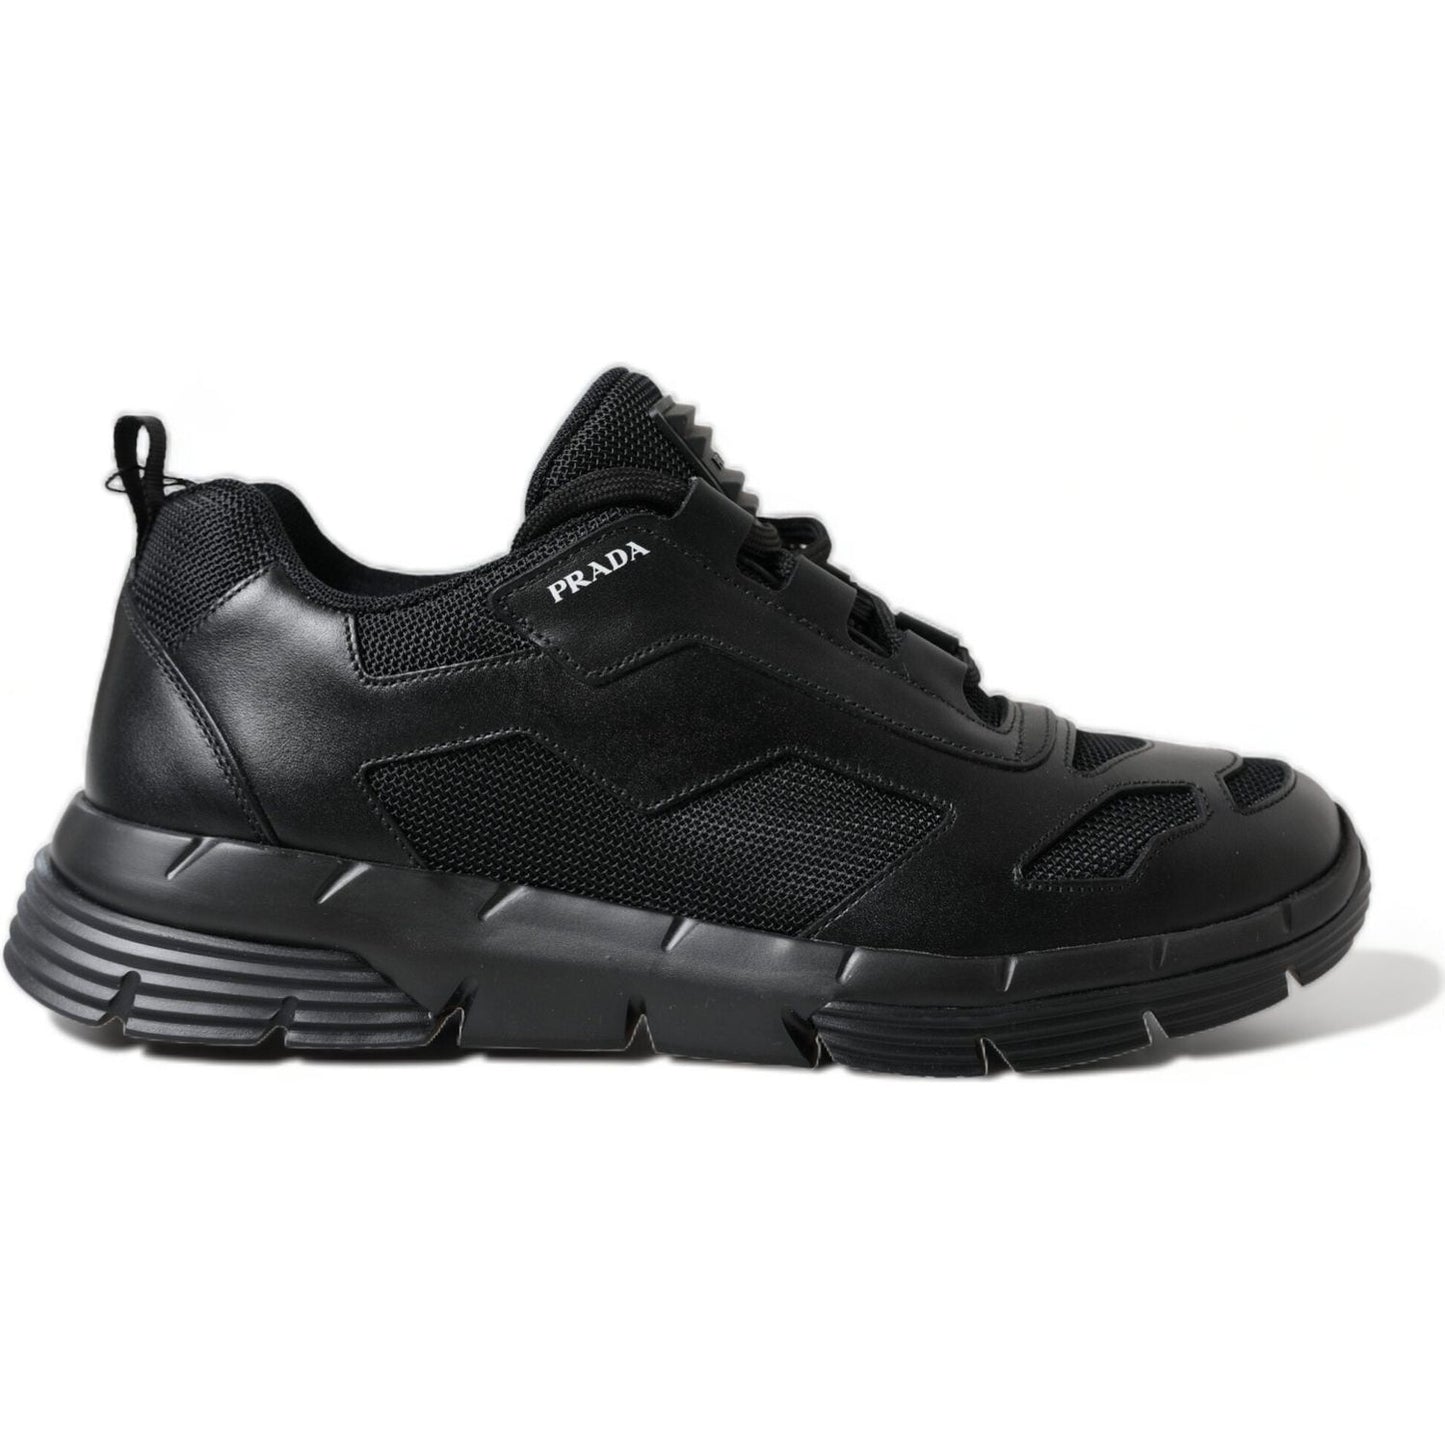 Prada Sleek Low Top Leather Sneakers in Timeless Black black-mesh-panel-low-top-twist-trainers-sneakers-shoes 465A4092-BG-scaled-ab3a35ba-bfa.jpg